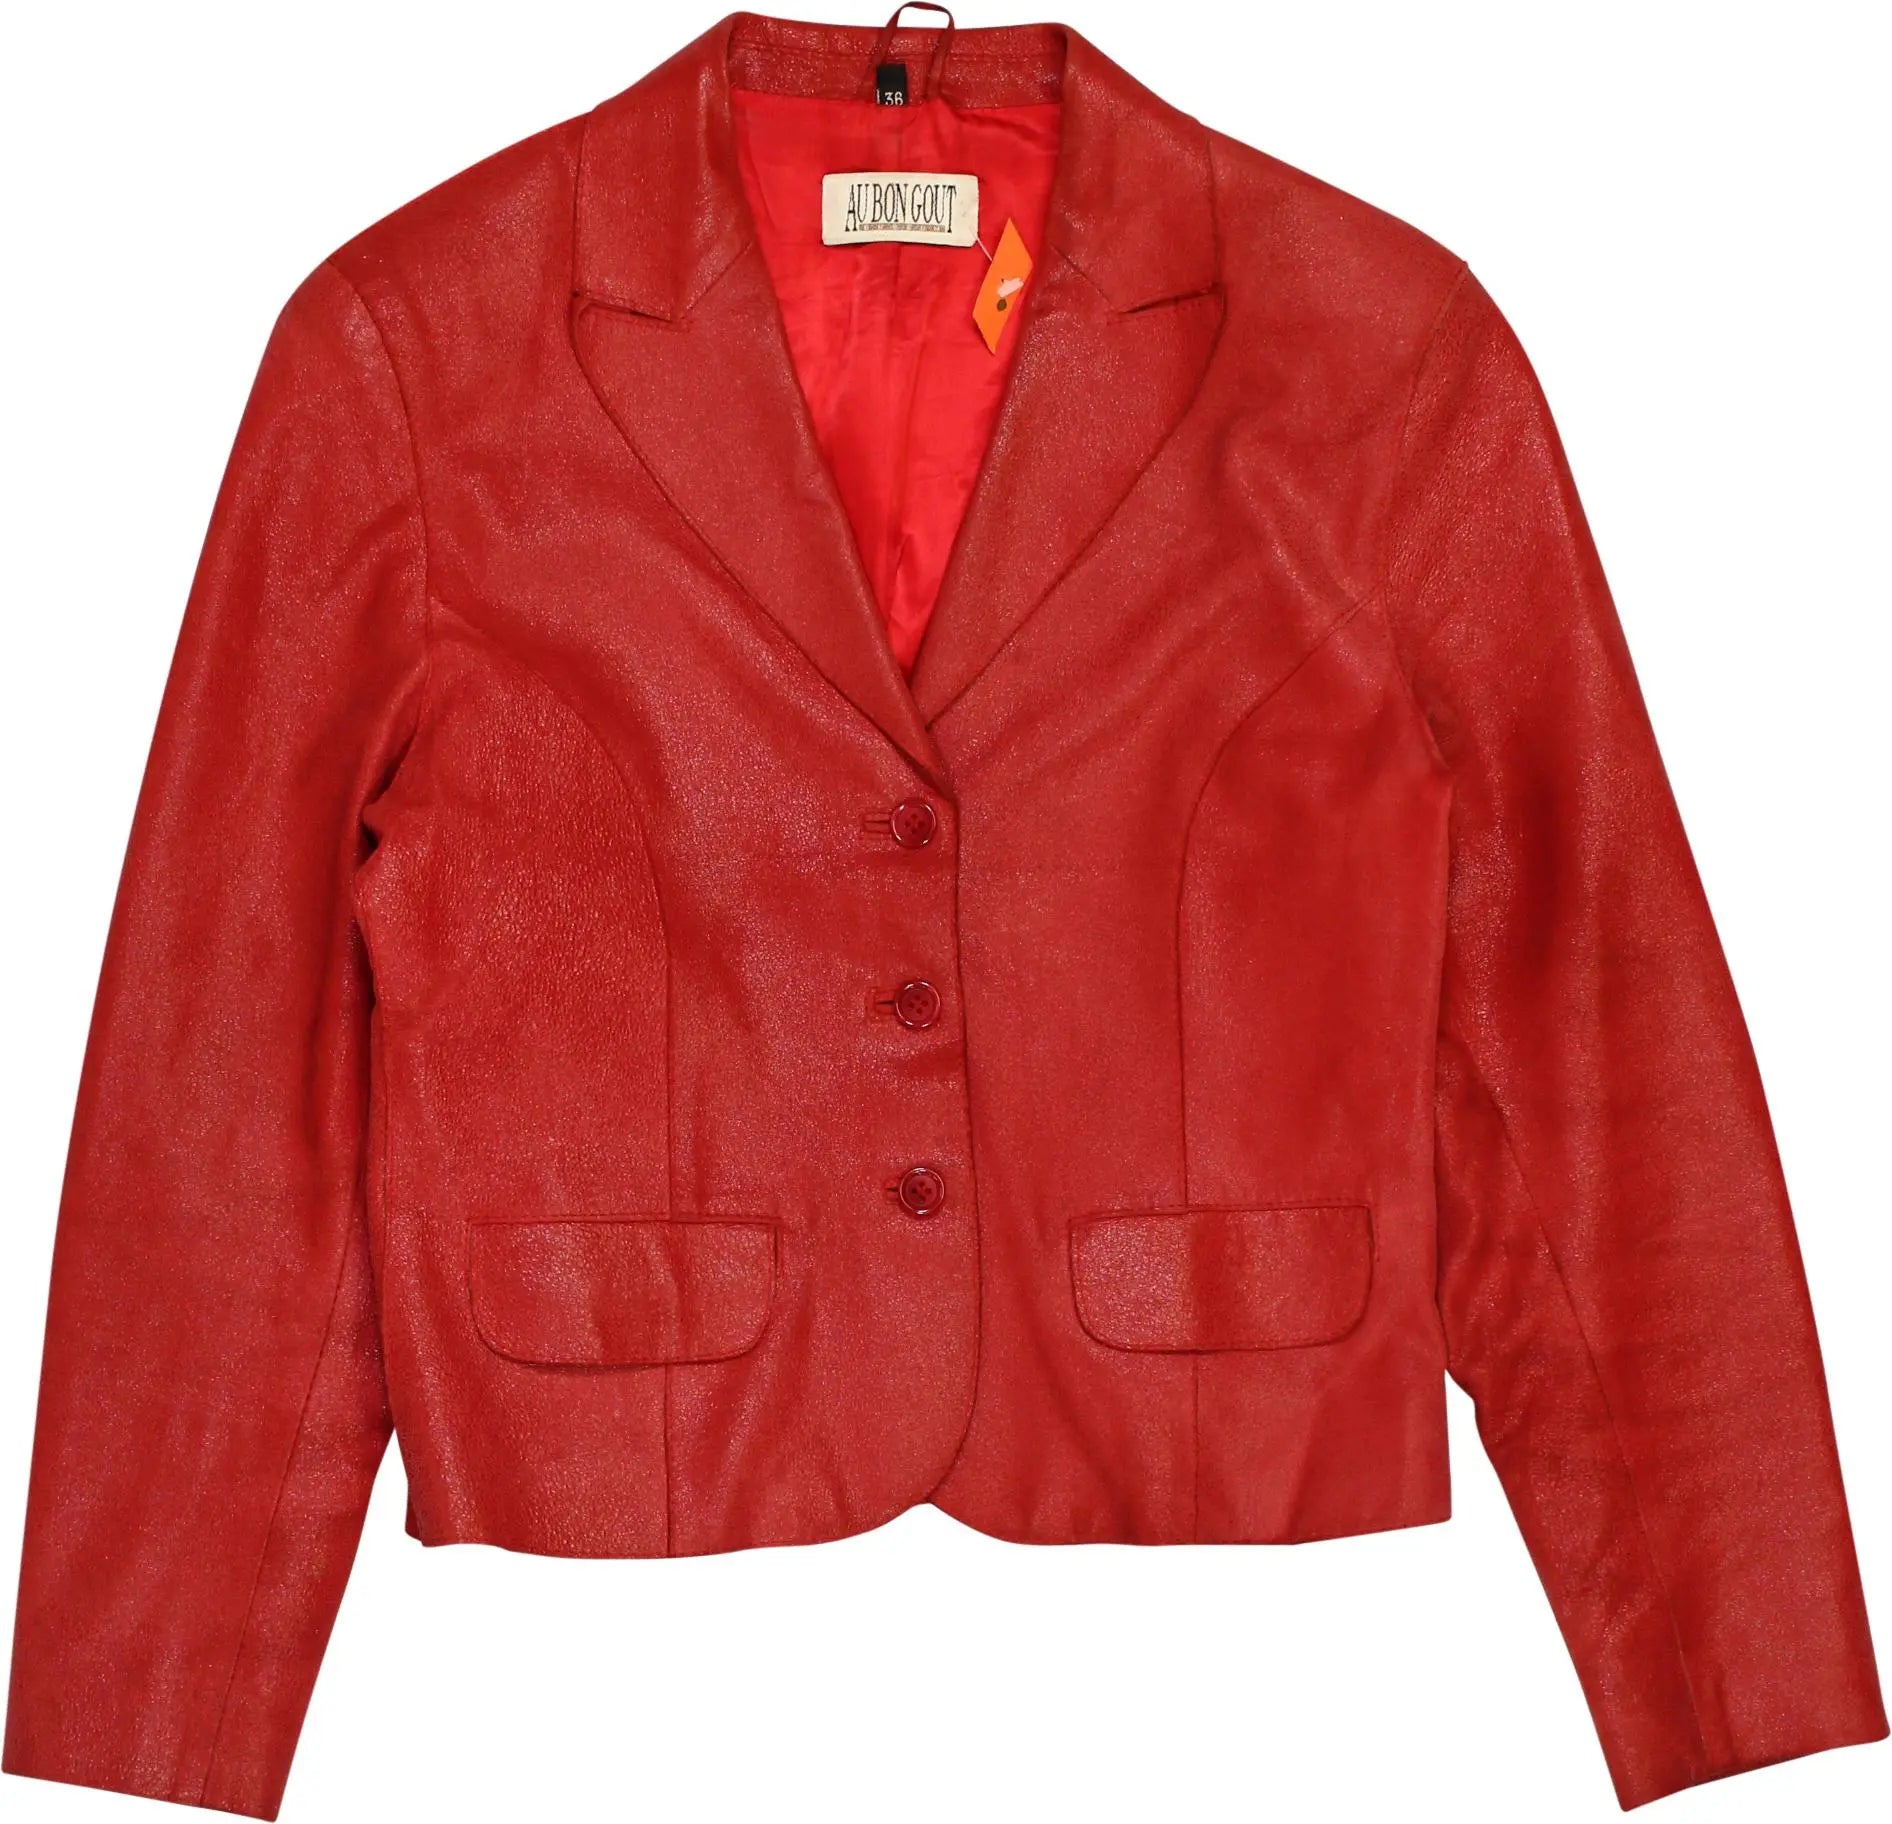 Au Bon Gout - Leather Blazer- ThriftTale.com - Vintage and second handclothing